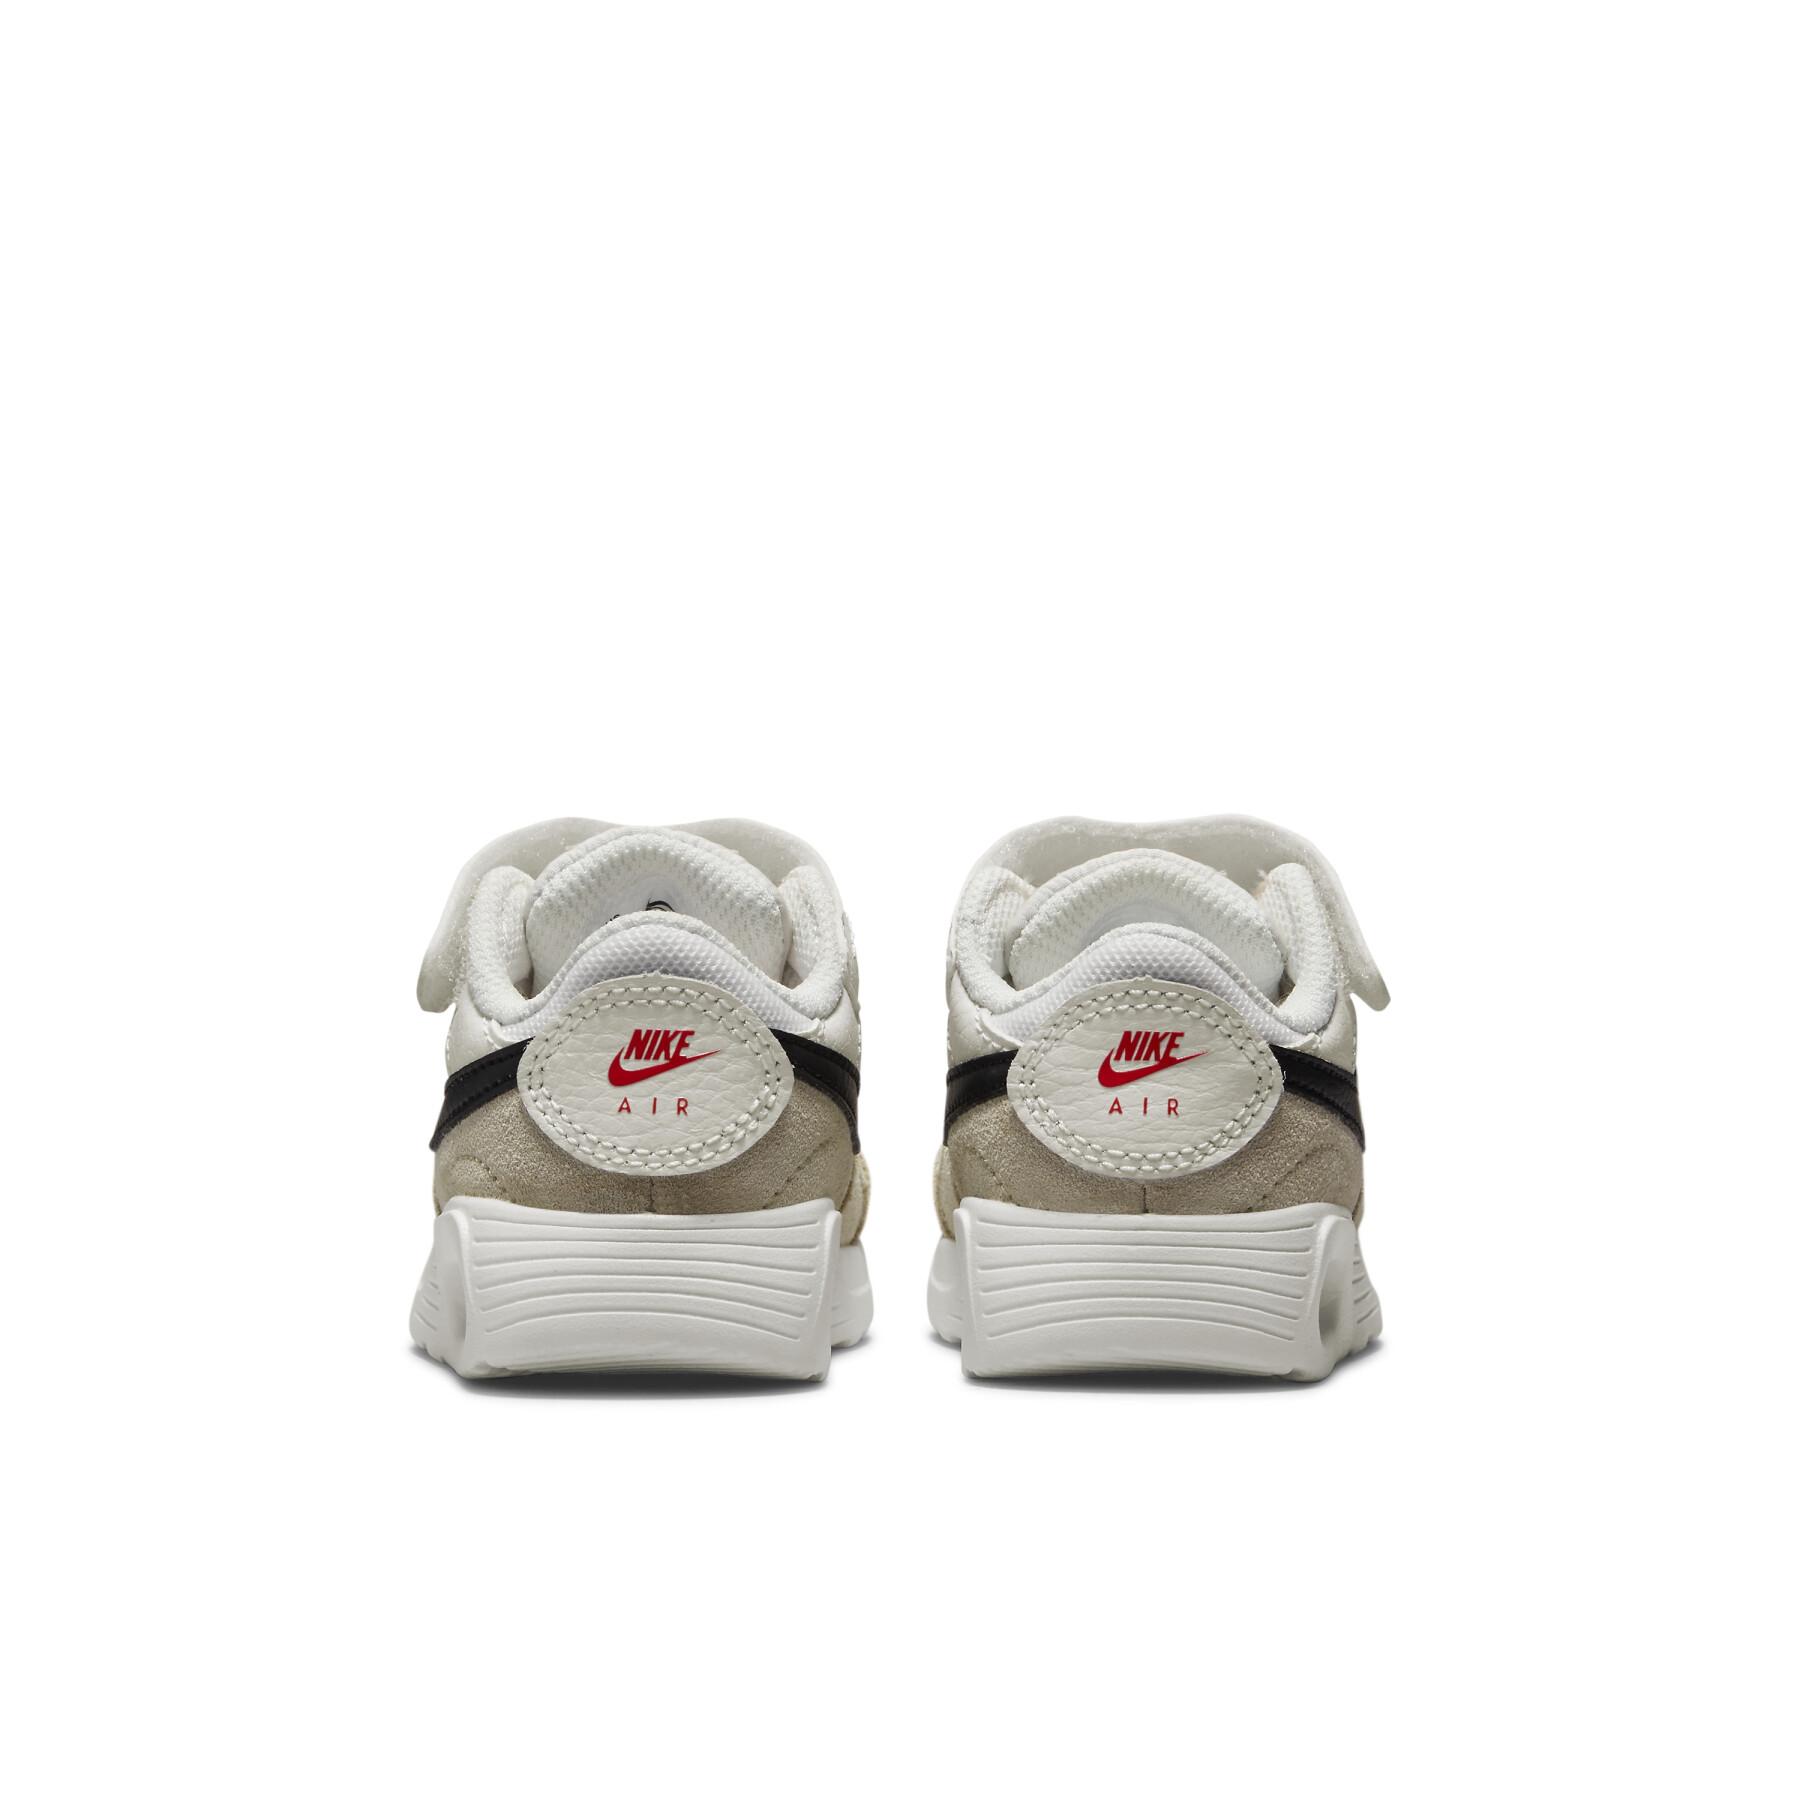 Baby boy sneakers Nike Air Max